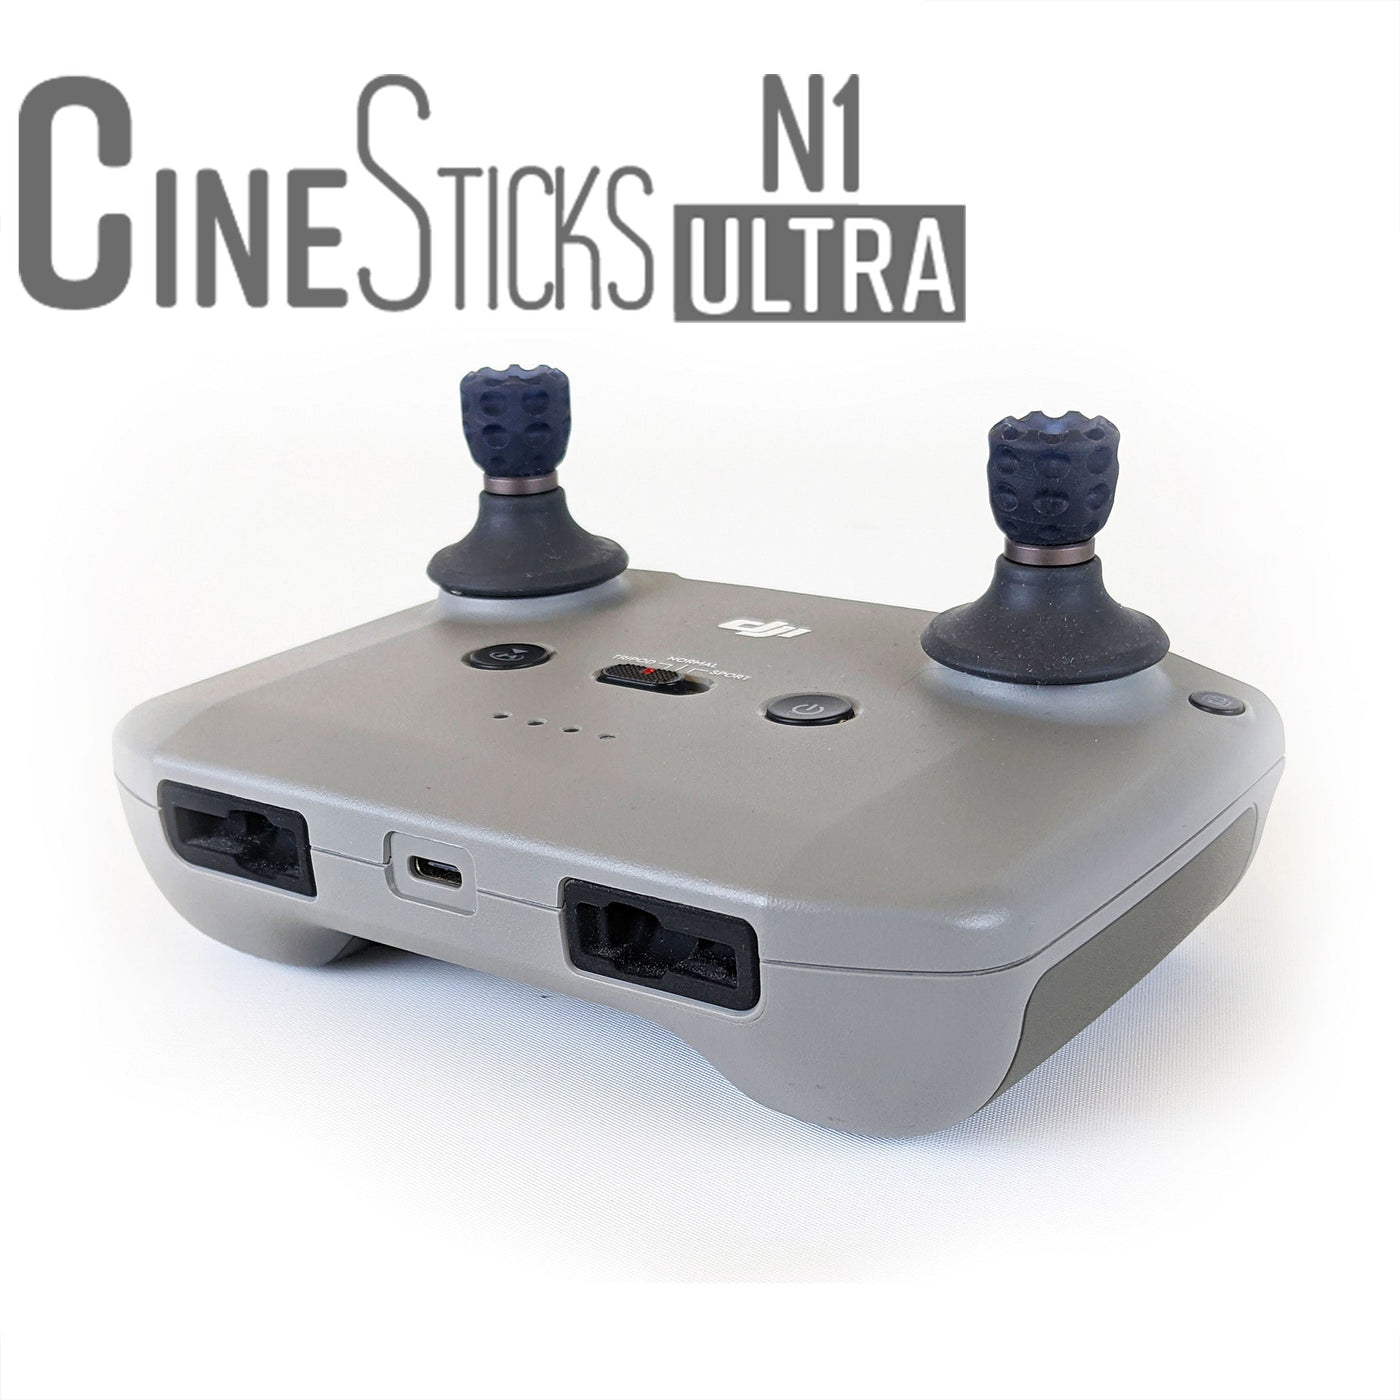 CineSticks N1 Pro - US